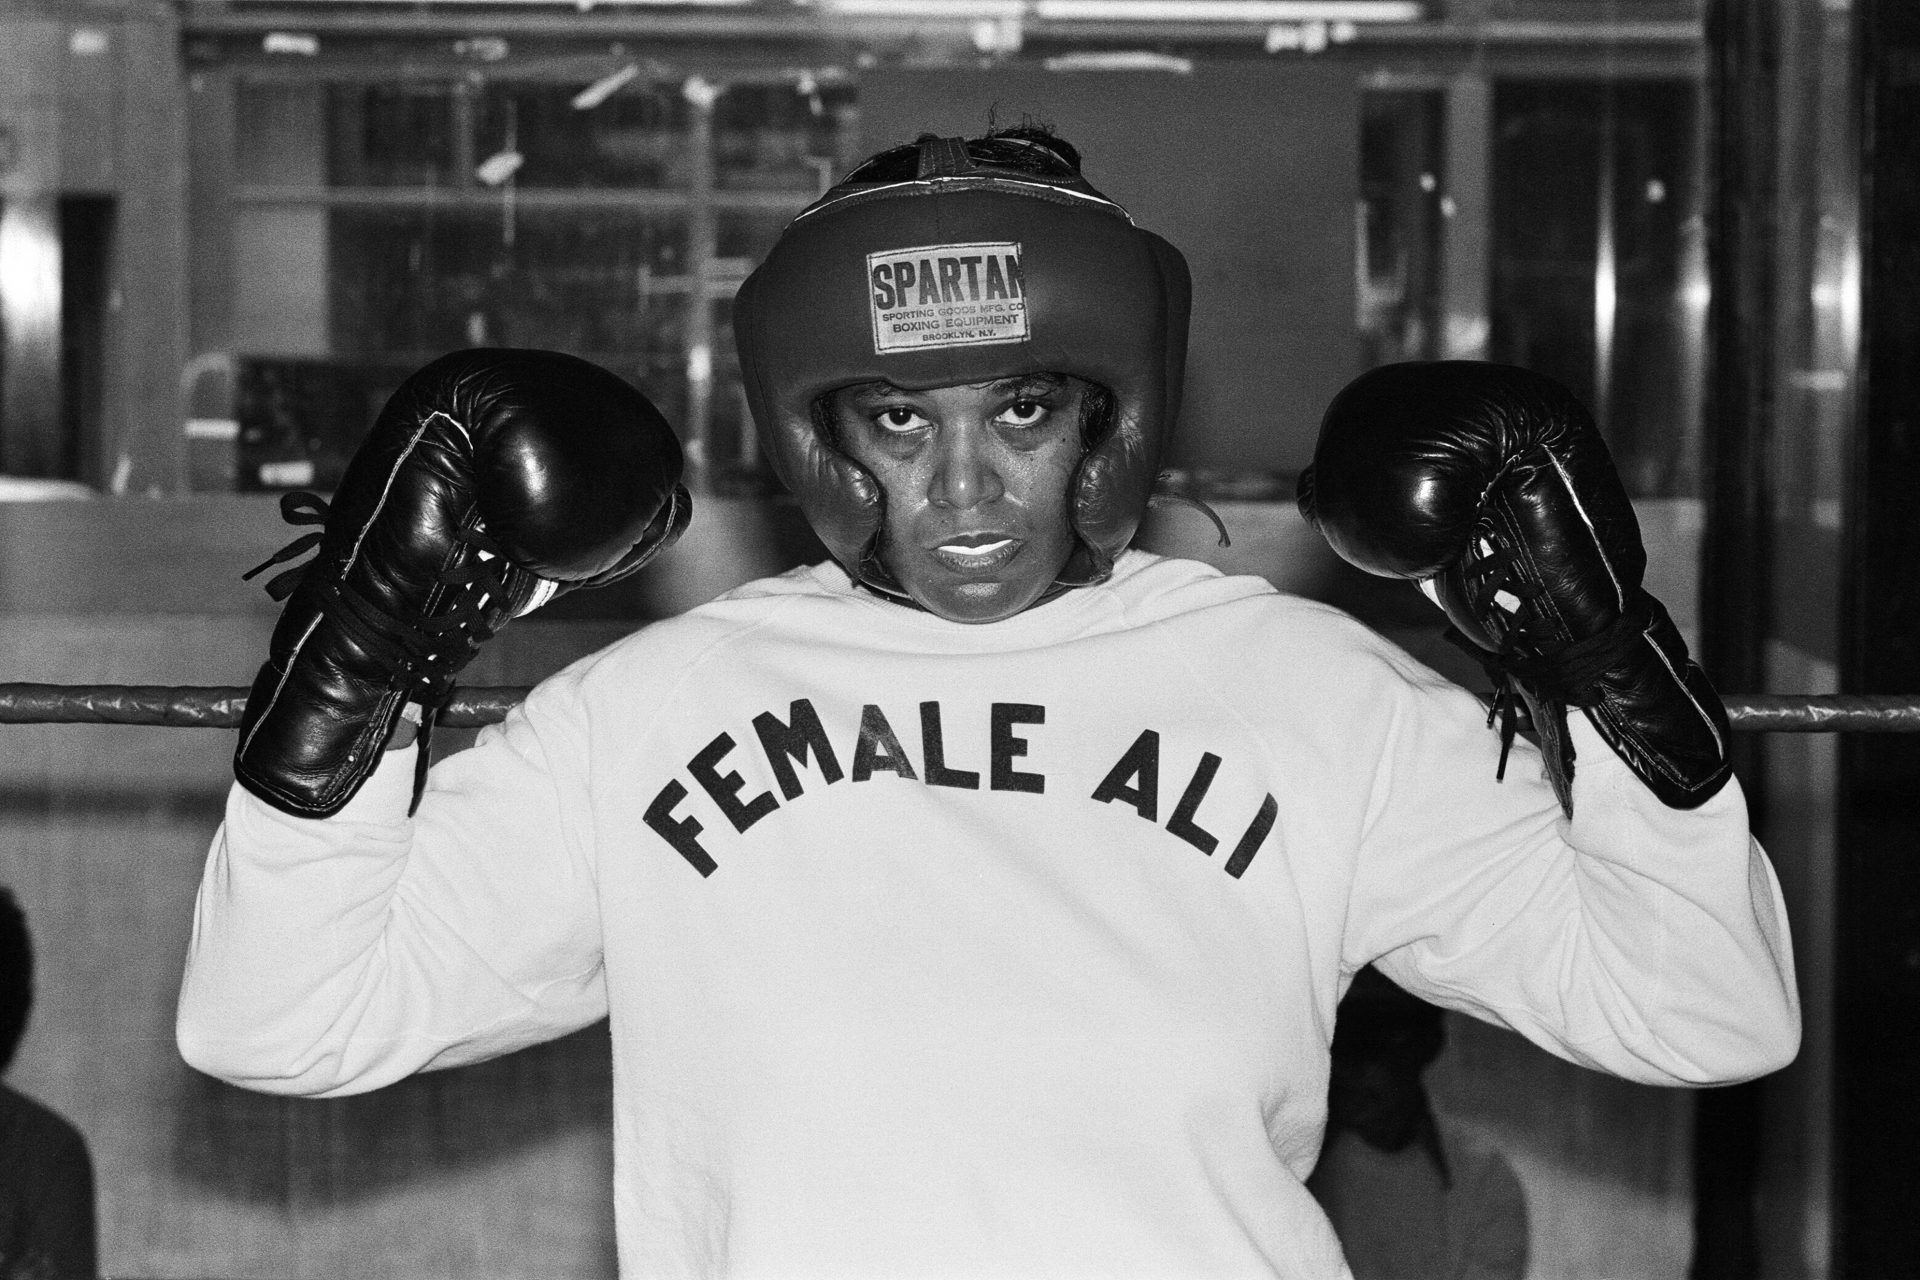 Jackie Tonawanda: the 'female Ali' that shocked the world